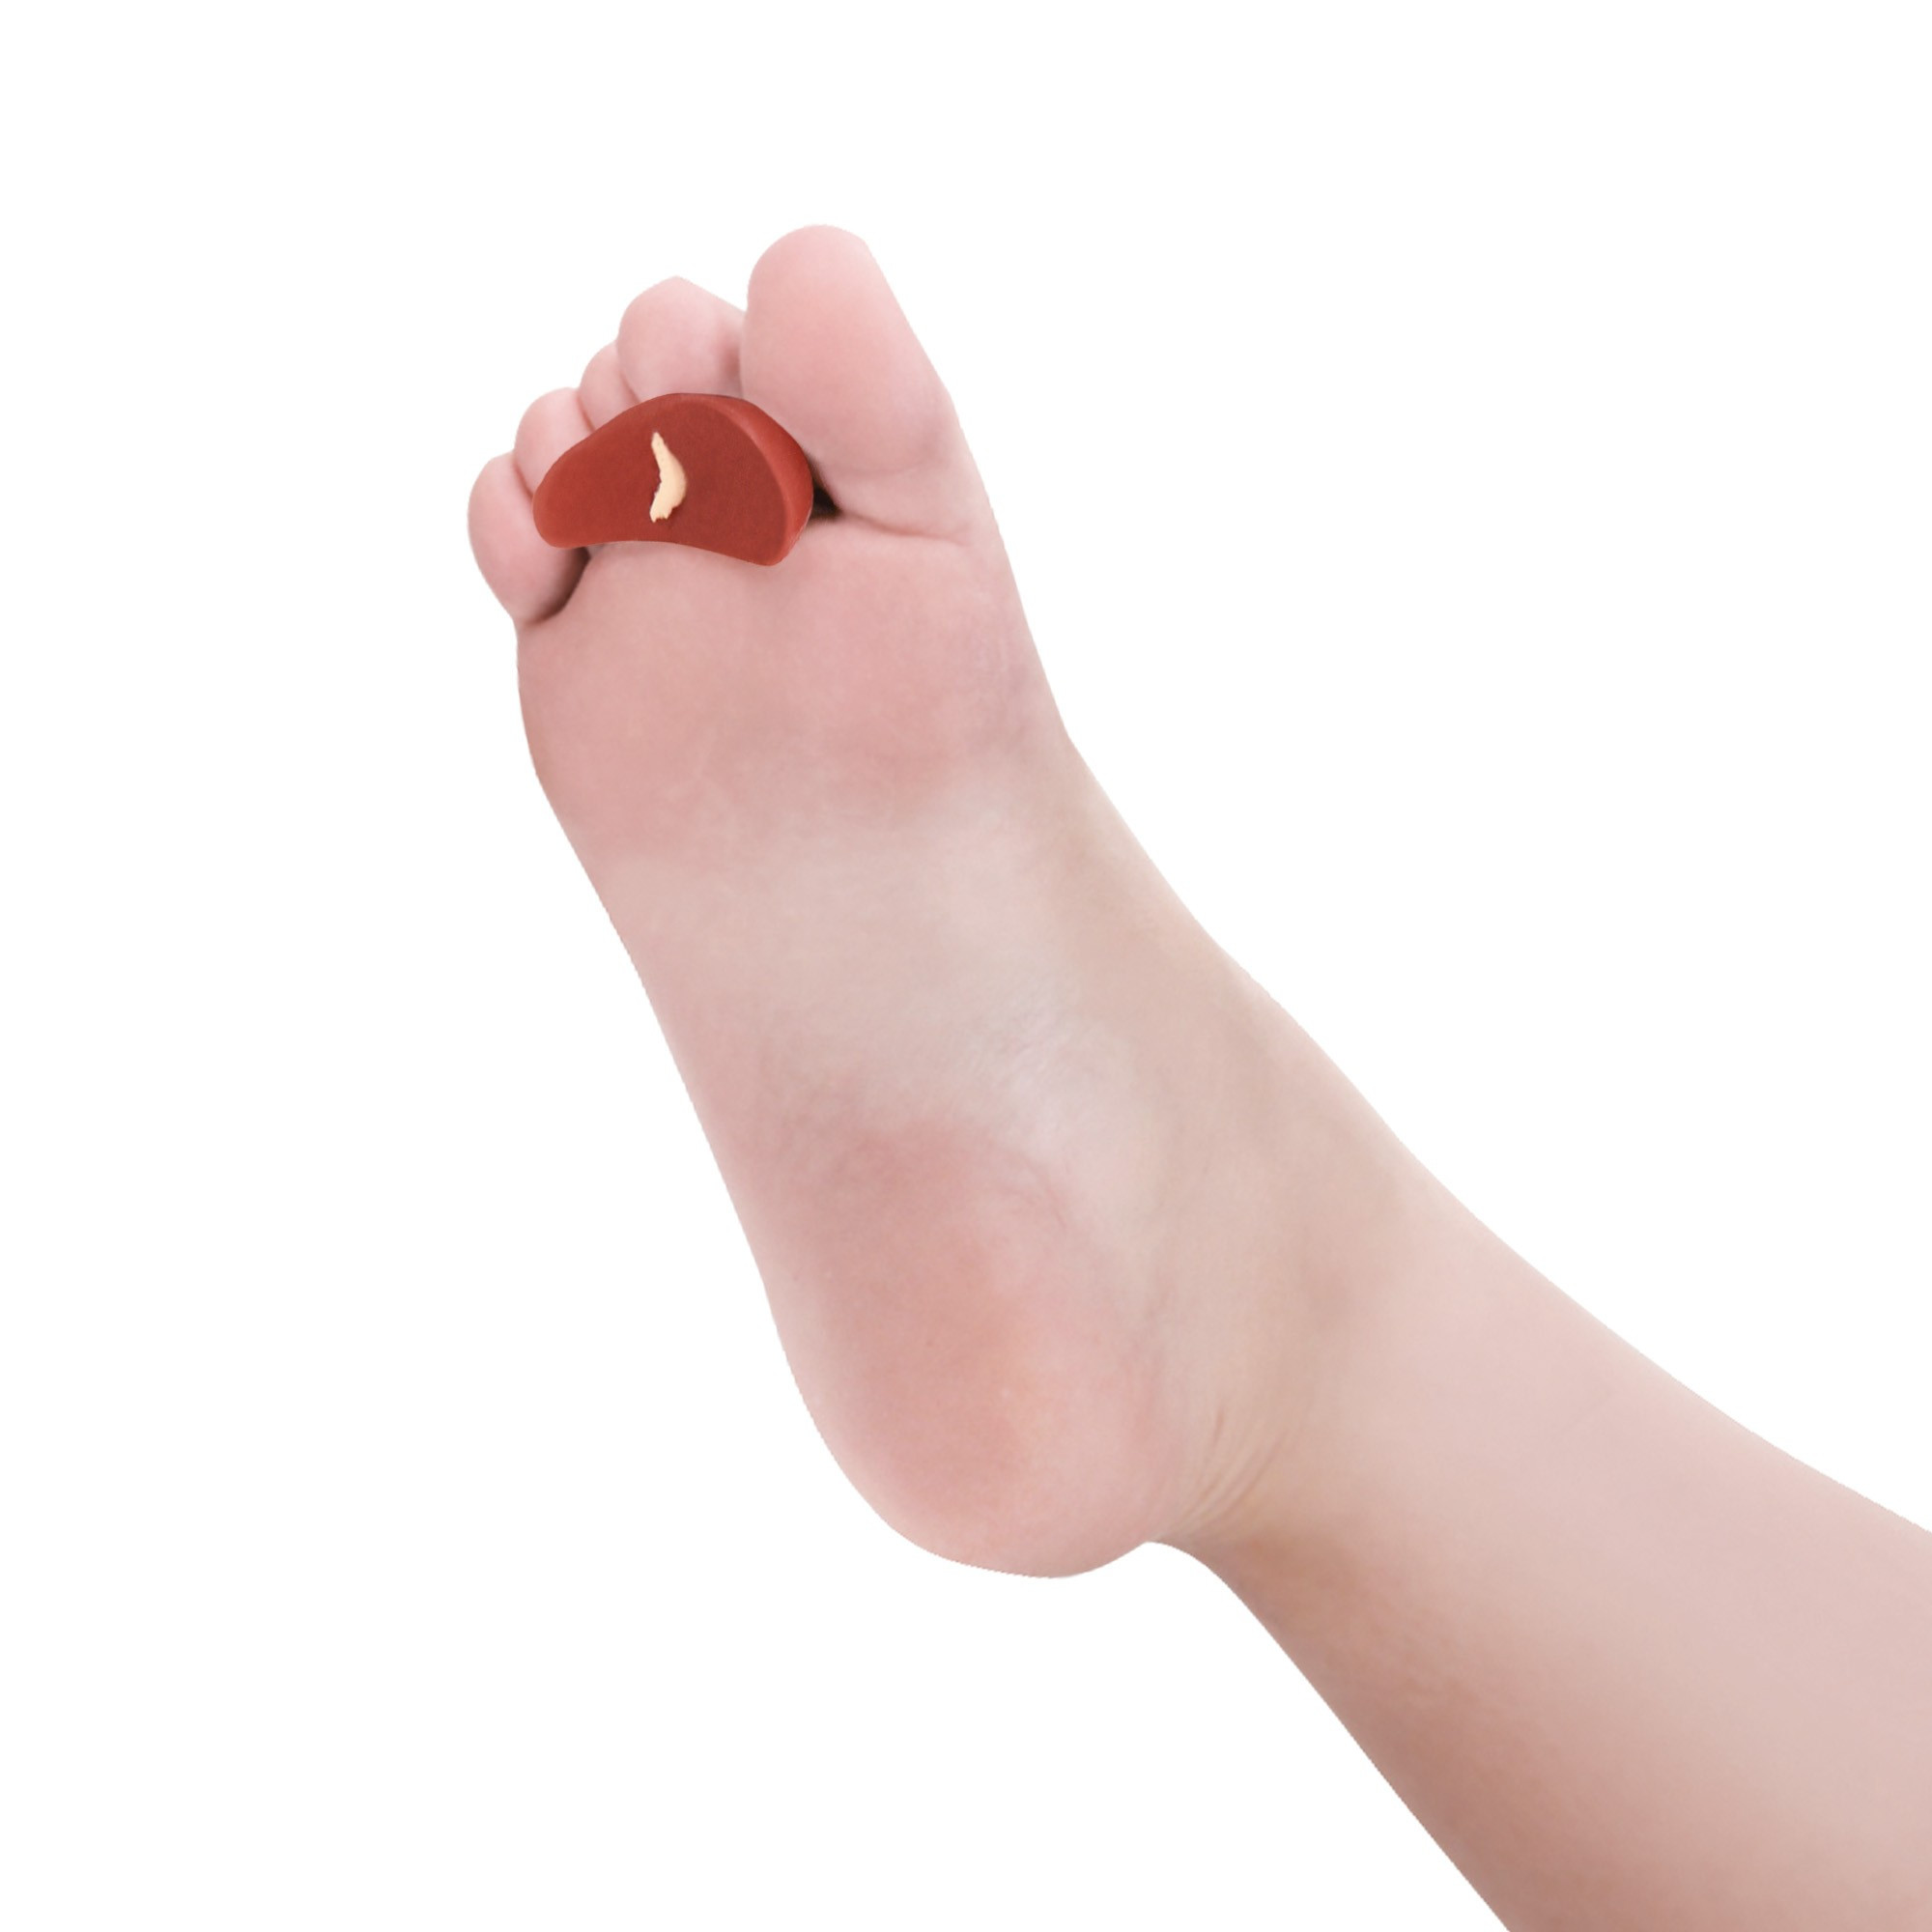 Cuscinetto per dita dei piedi in Tecniwork Polymer Gel con elastico regolabile